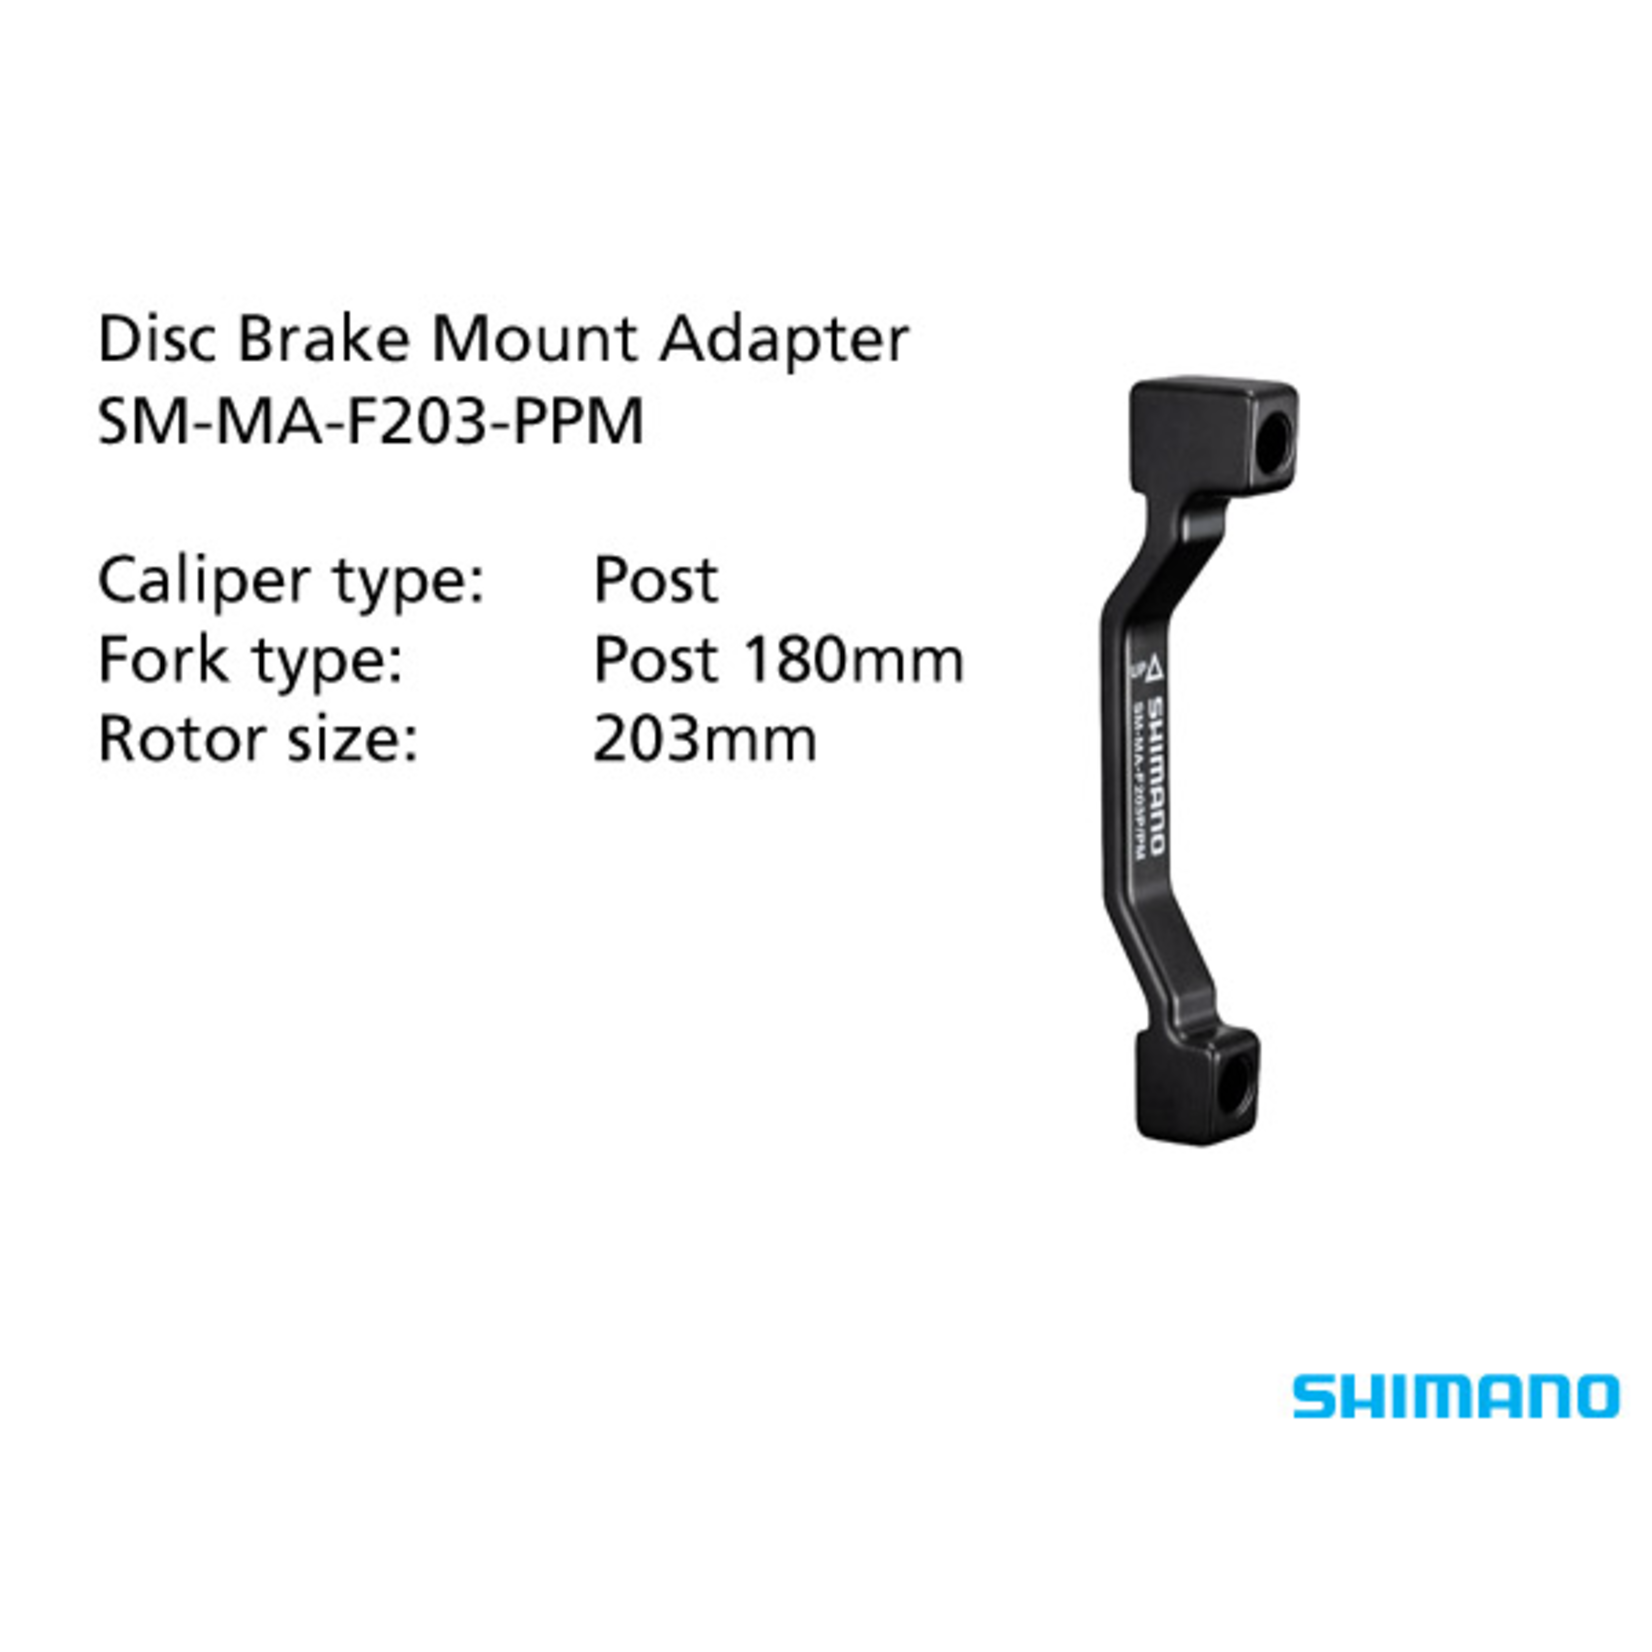 Shimano Shimano SM-MA-F203-PPM Adapter 203mm Caliper: Post Mount: Post 180mm